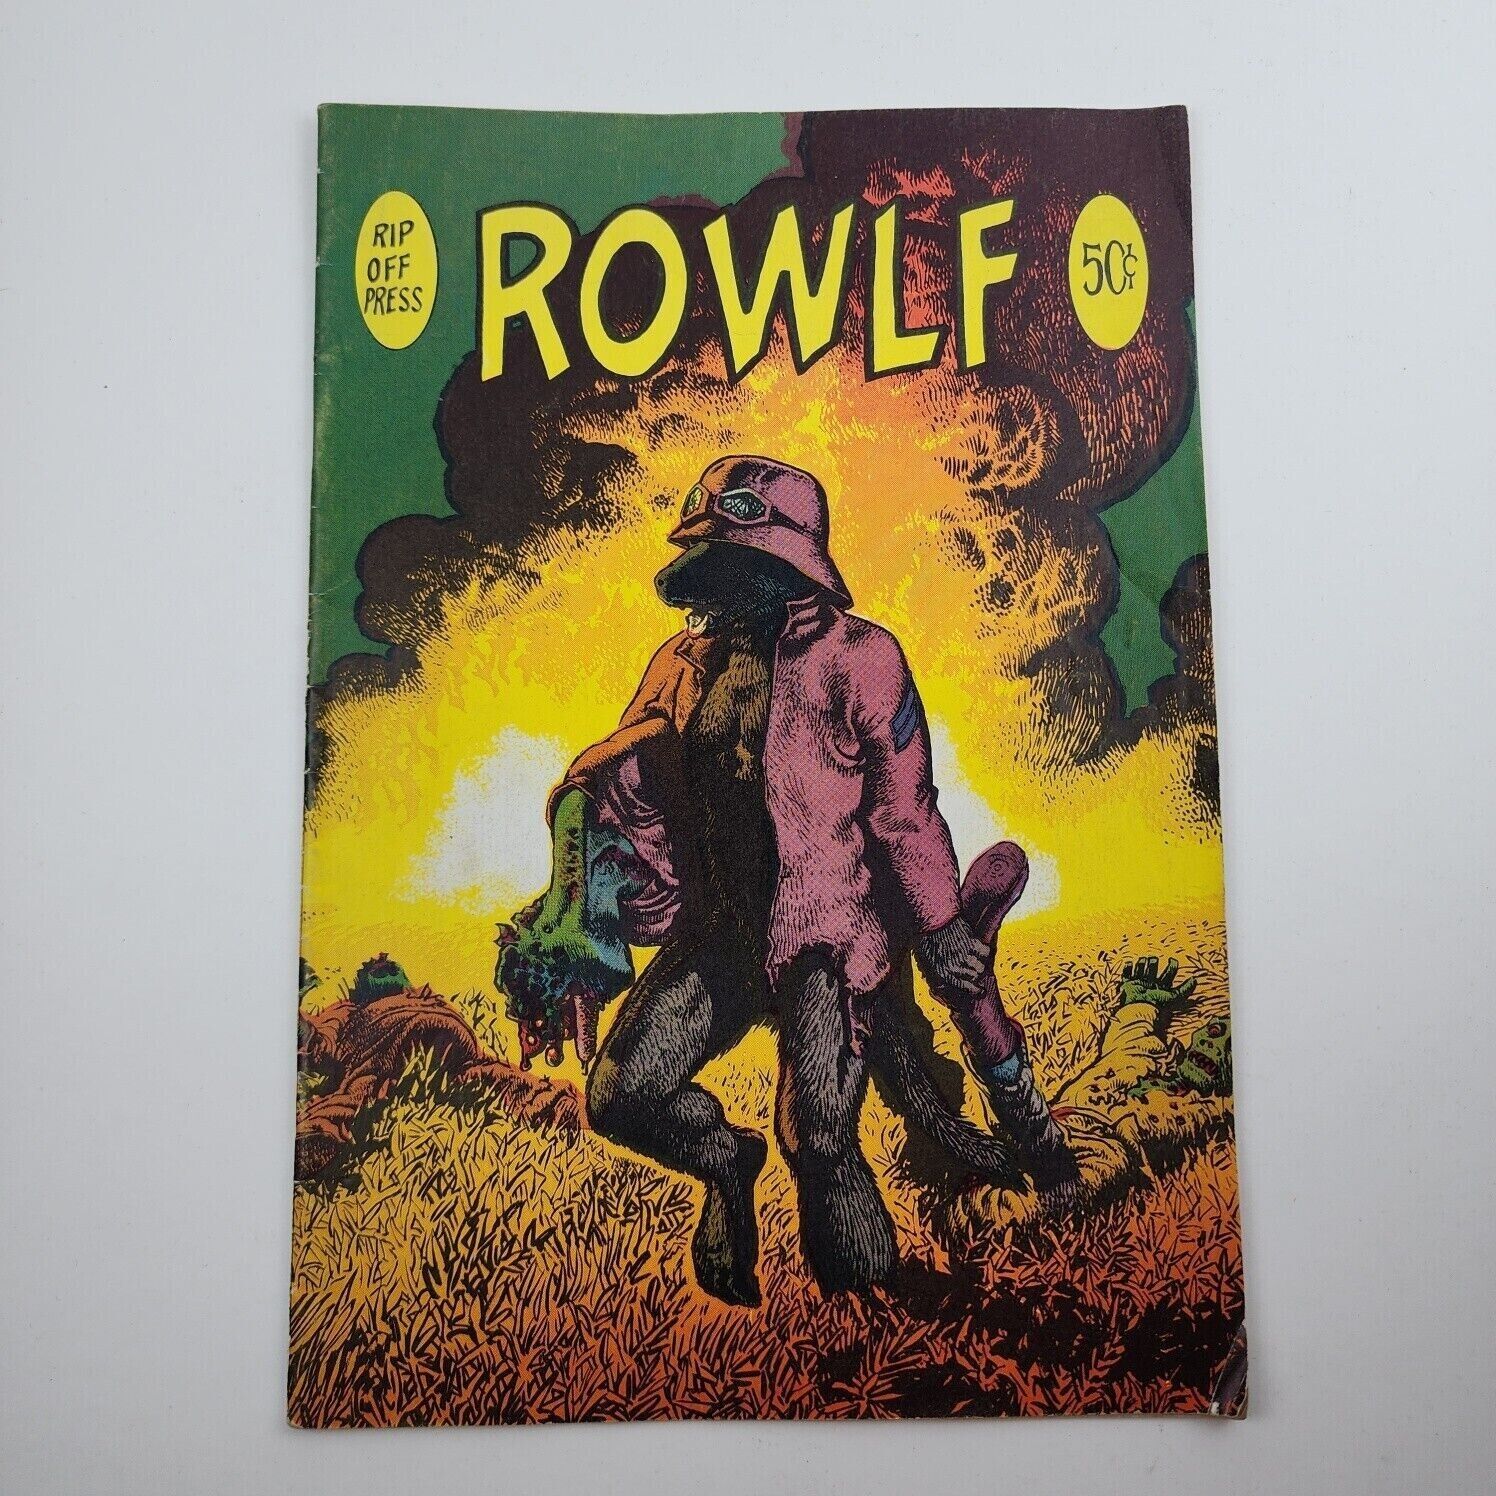 Rip Off Press - ROWLF Comic Book, 1971 - Richard Corben